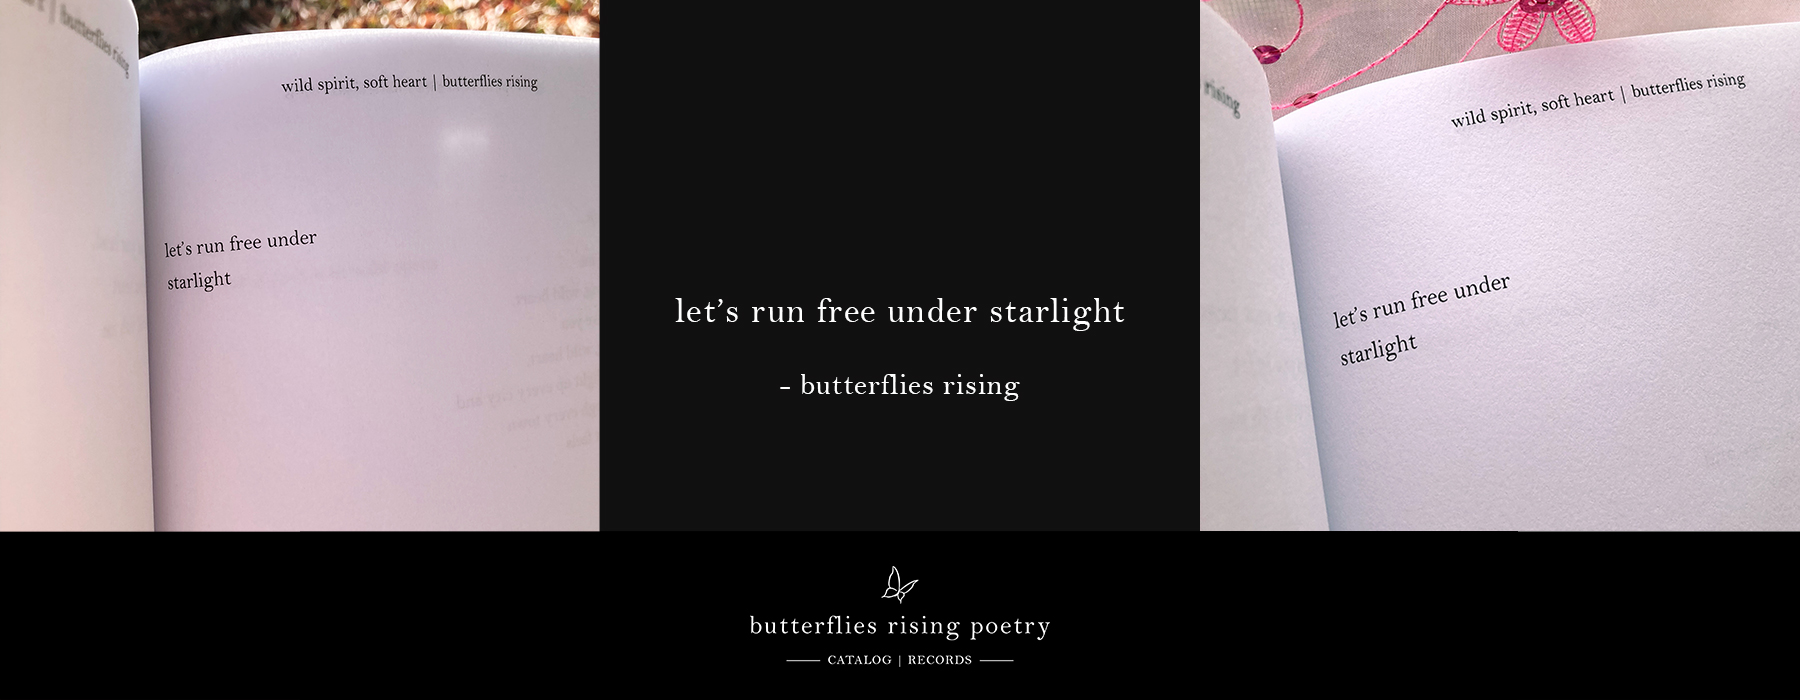 let’s run free under starlight poem series - butterflies rising